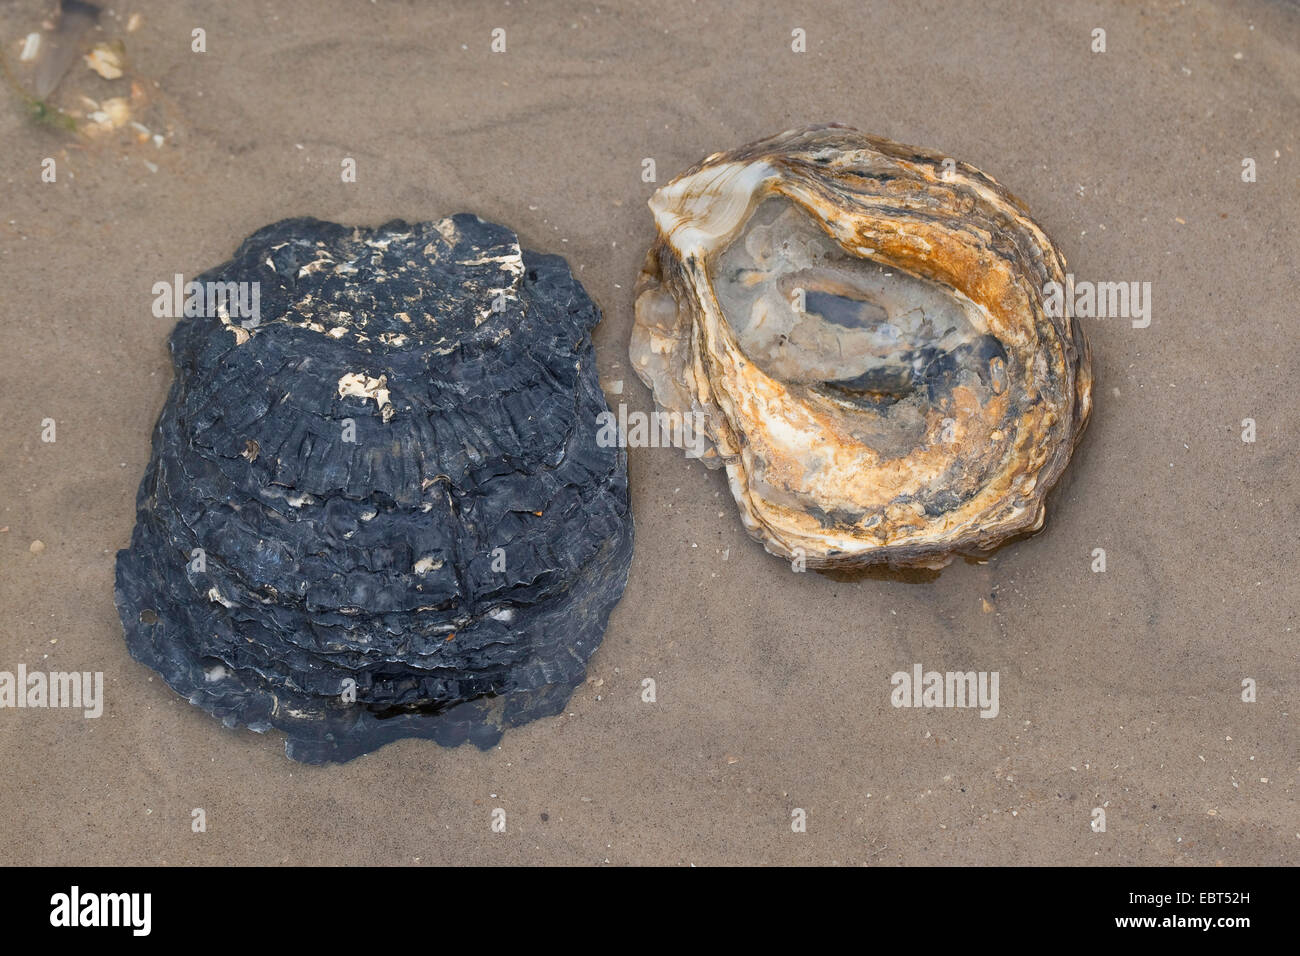 La Ostra plana europea, Colchester ostra nativa, barro, comestible ostra ostra (Ostrea edulis), conchas en la playa, Alemania Foto de stock